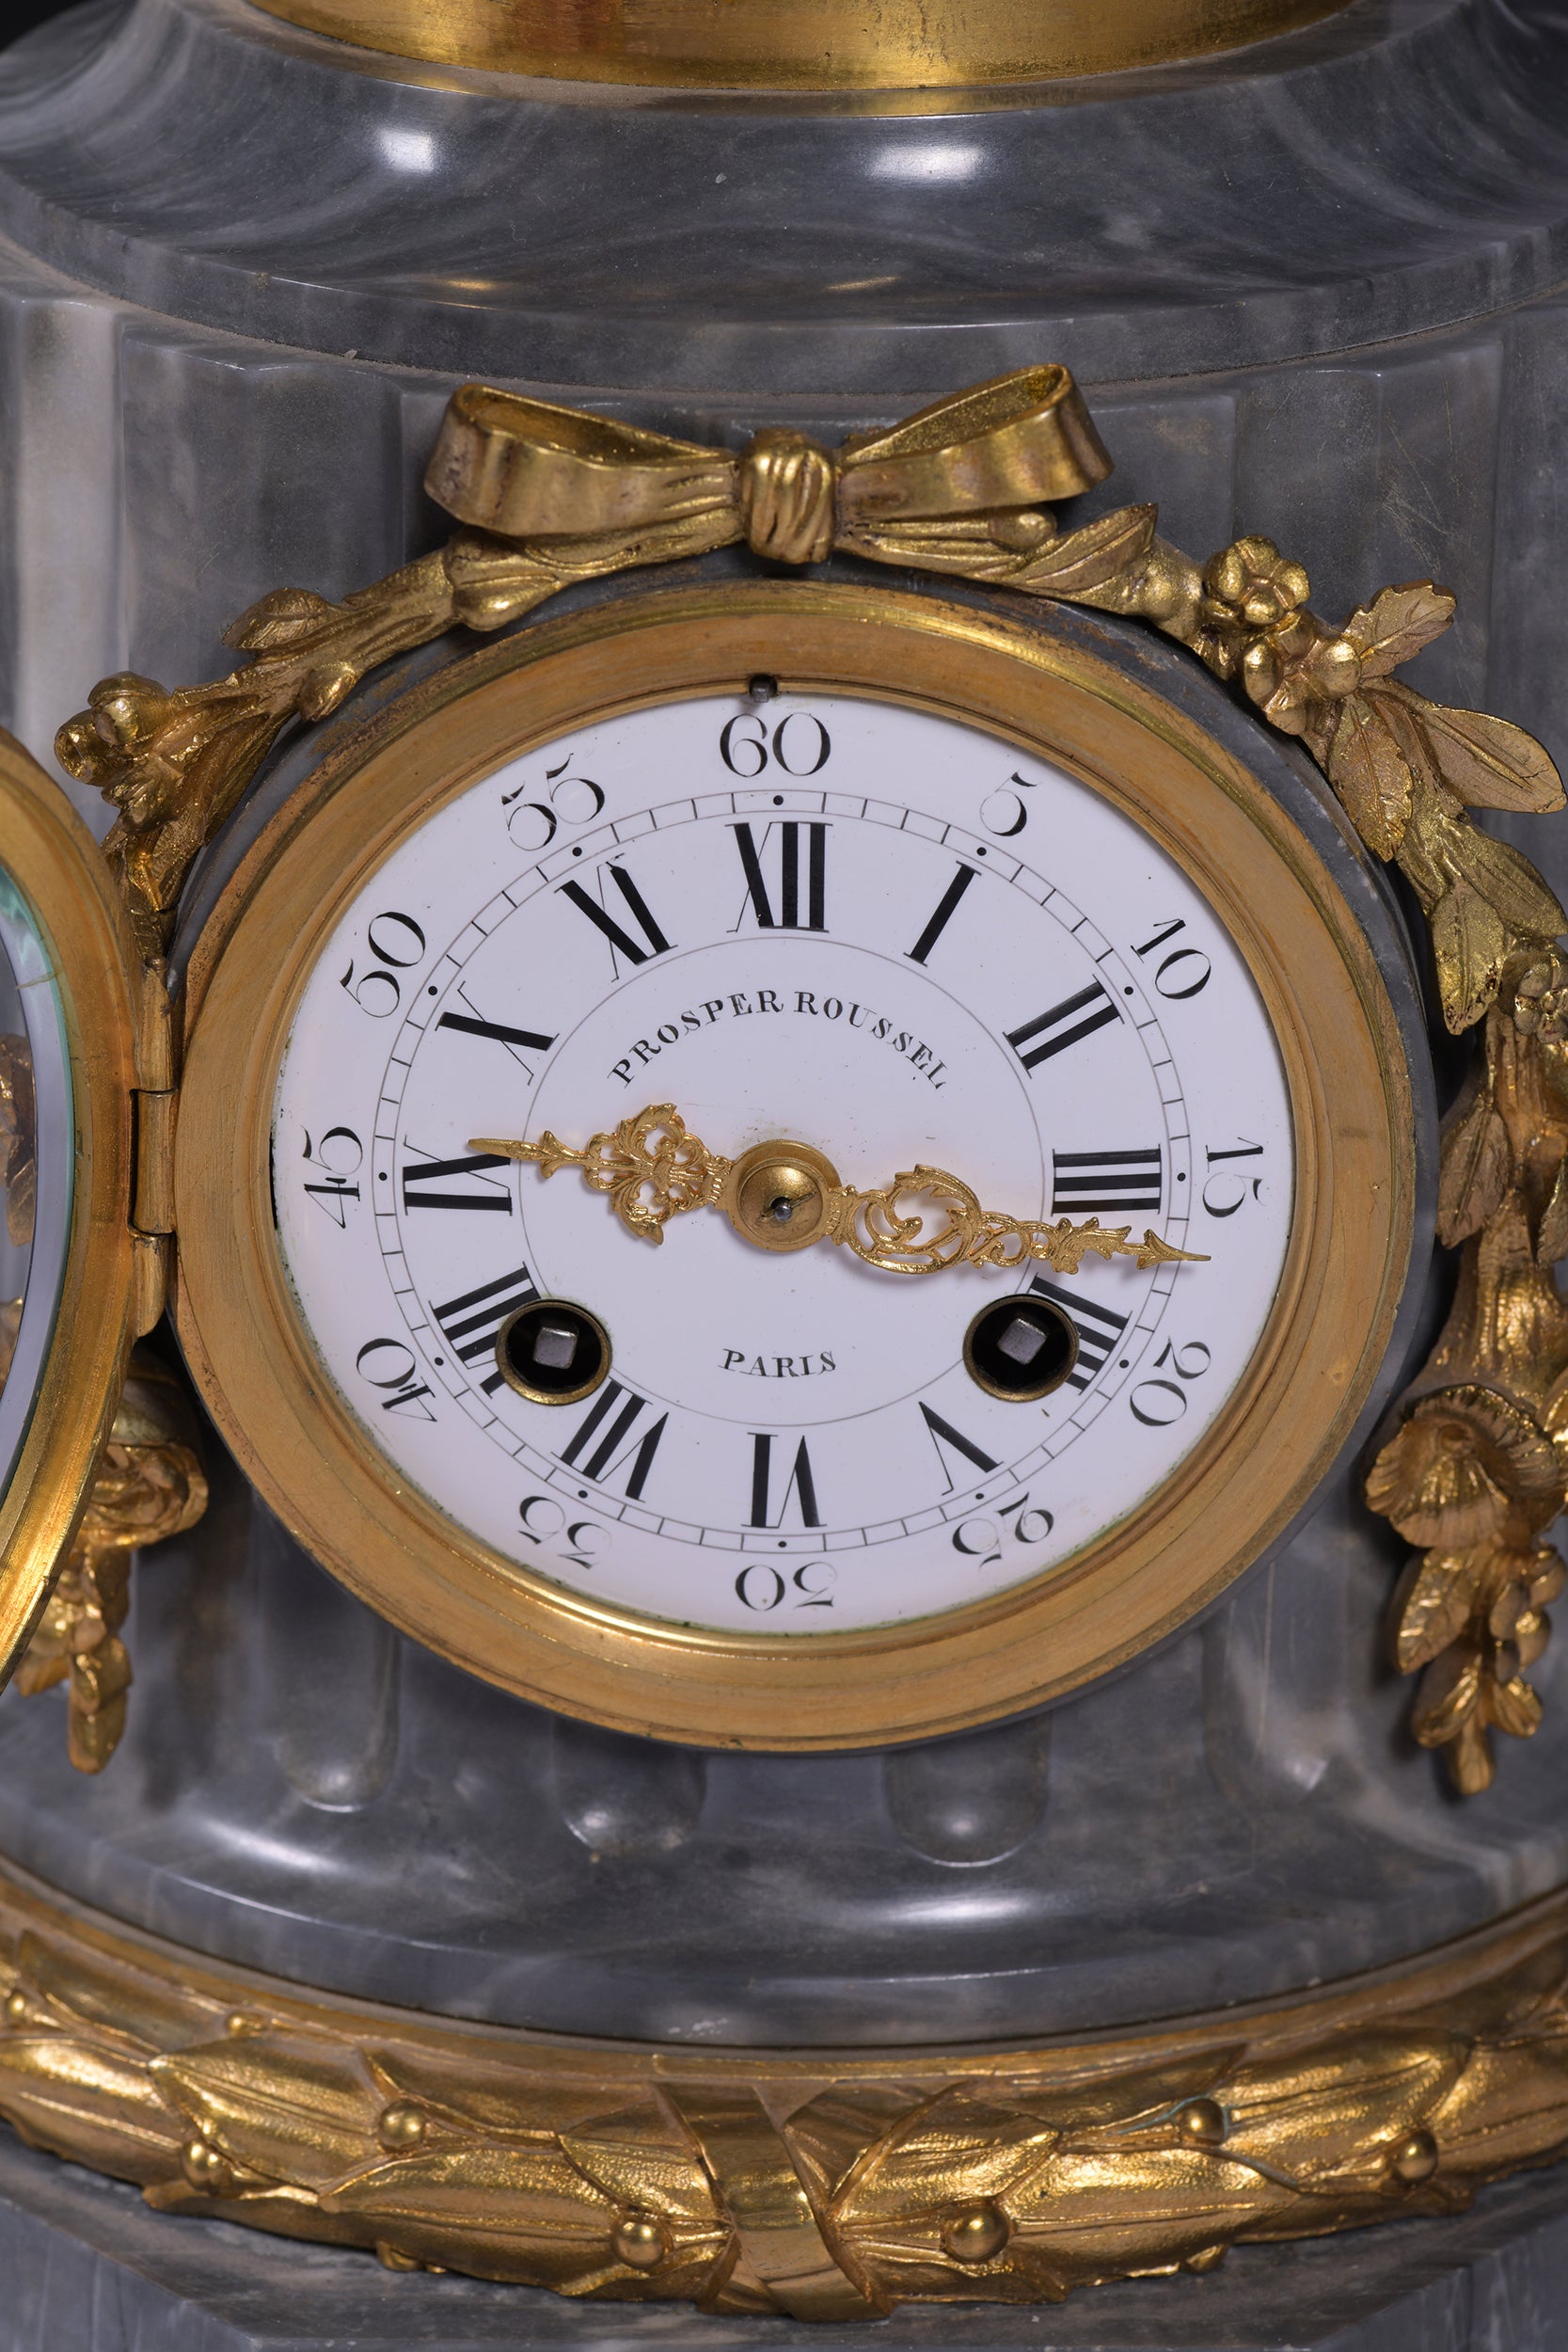 FRENCH CLOCK GARNITURE BY PROSPER ROUSSEL OF PARIS - REF No. 104